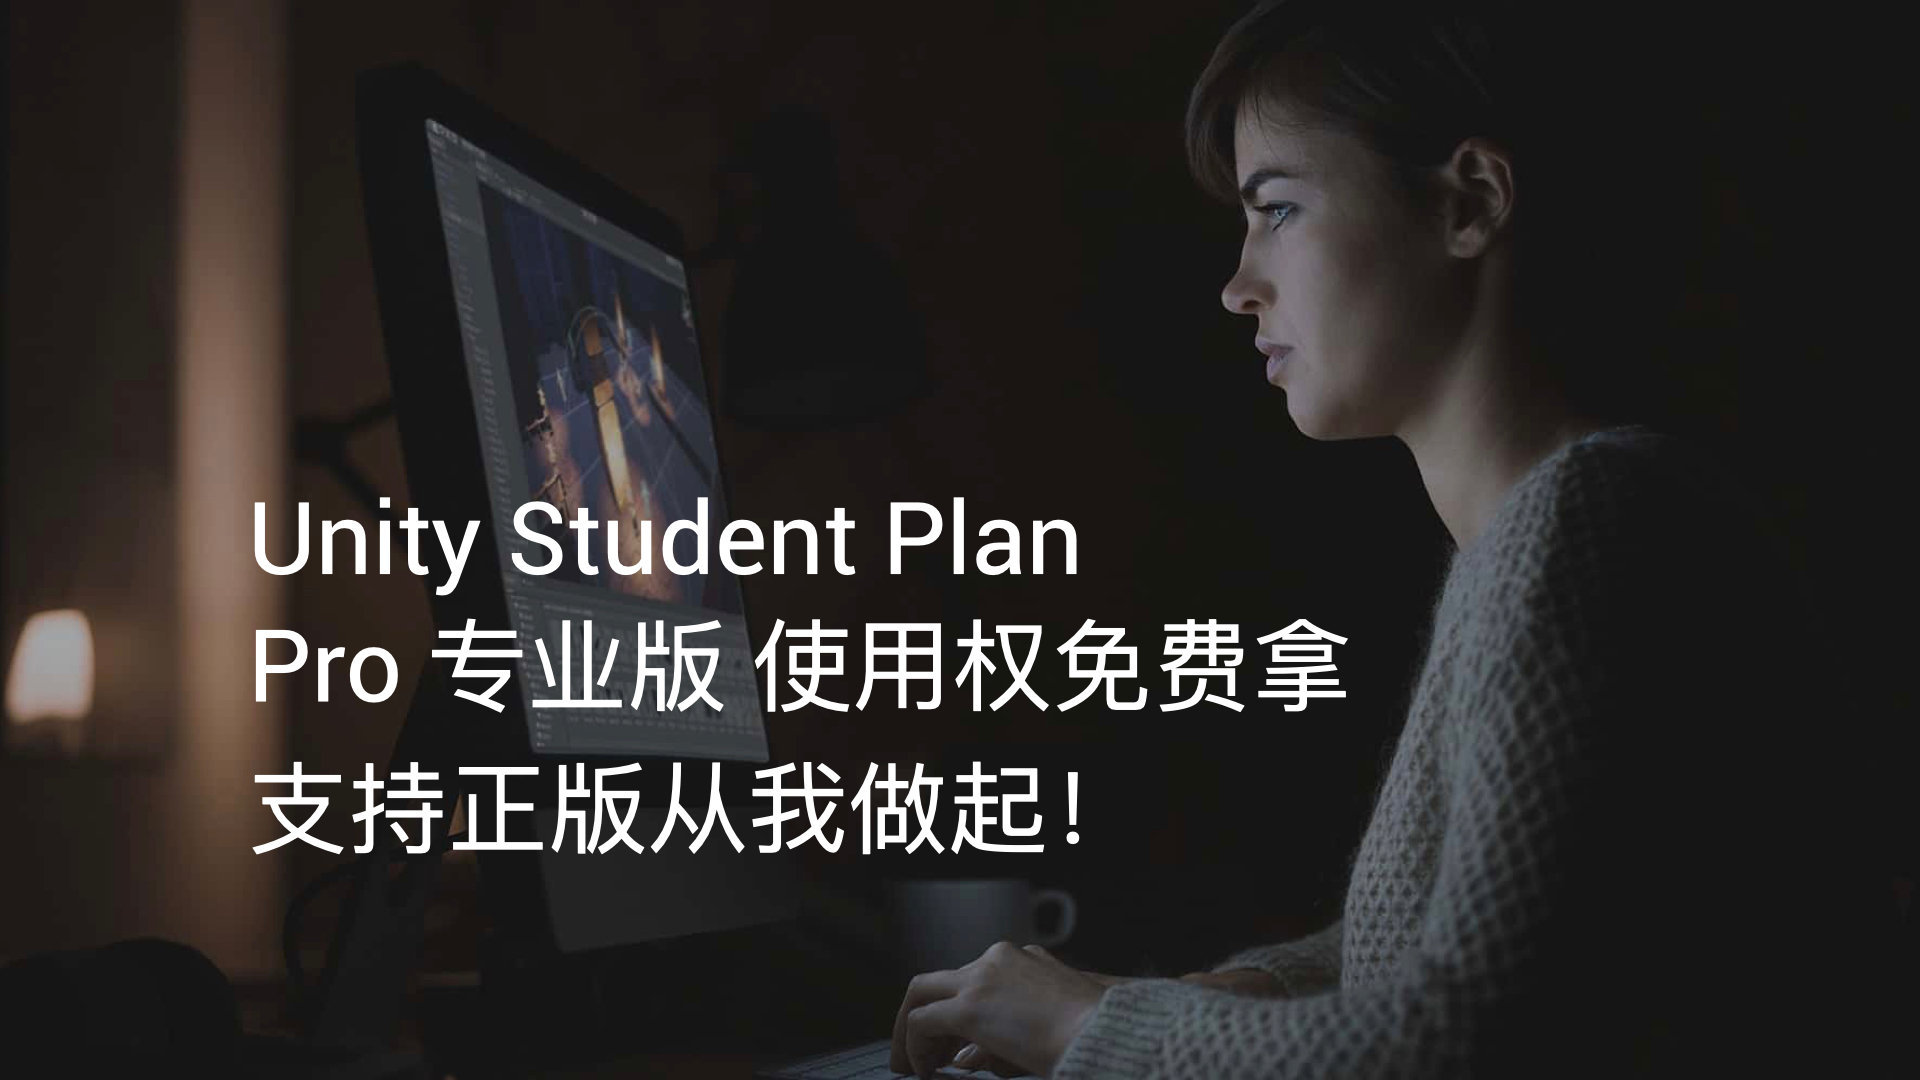 Unity Student Plan Pro